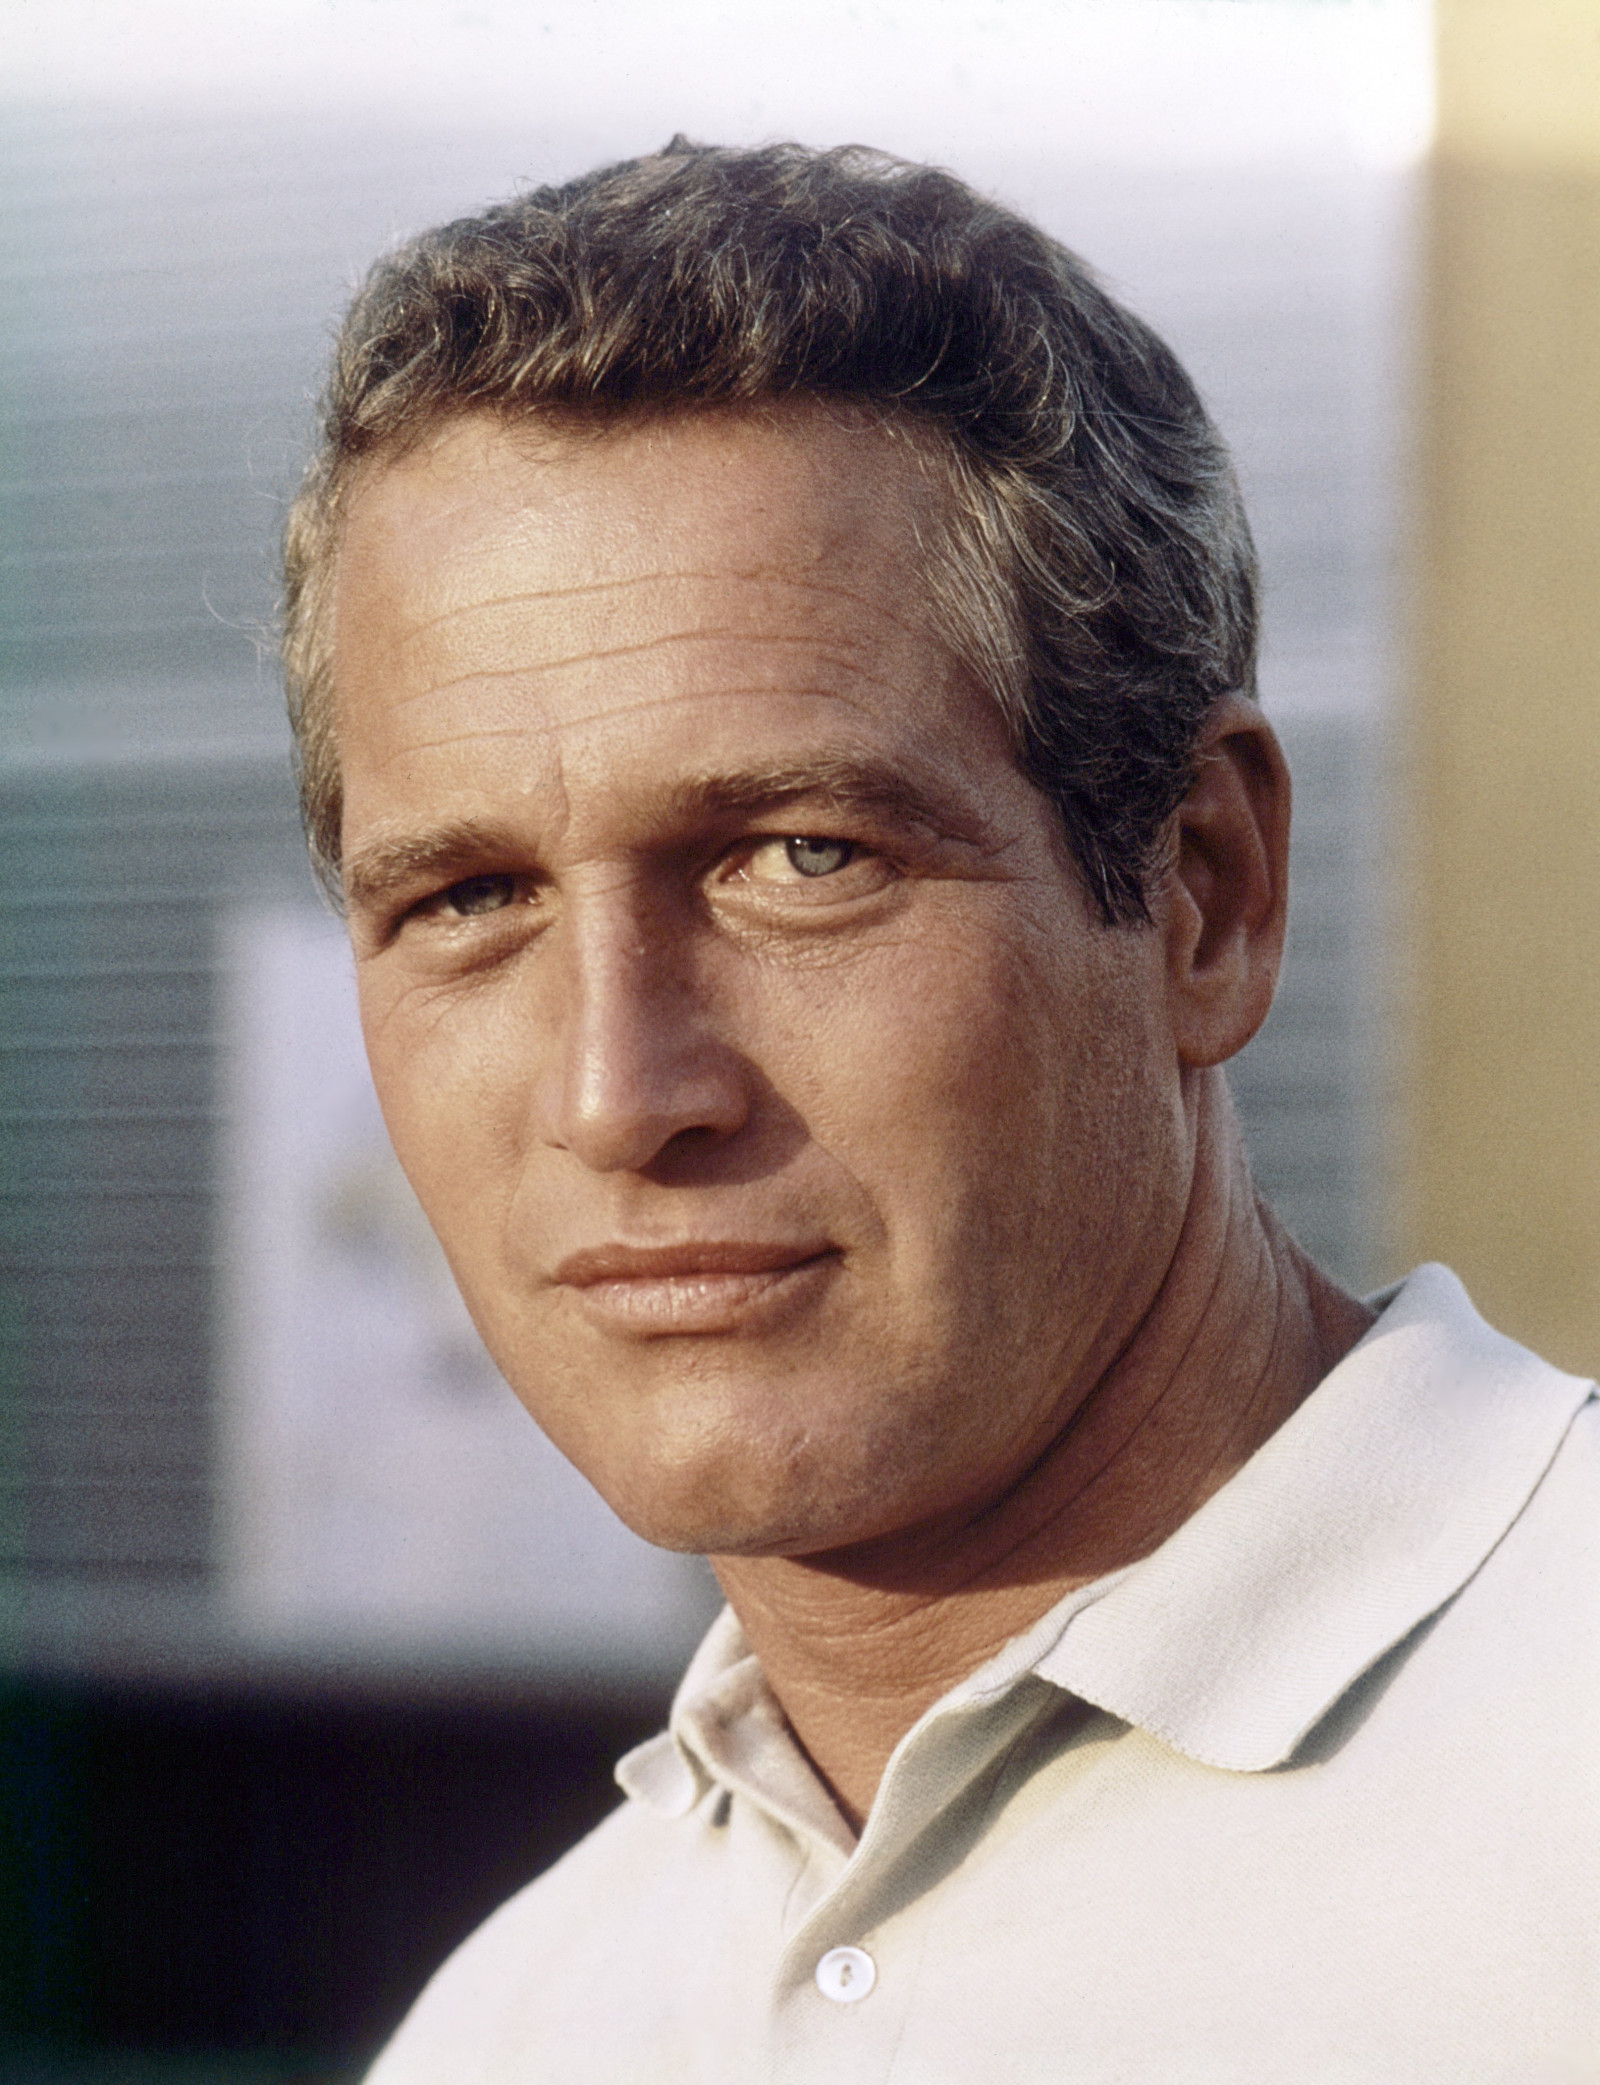 Пол Ньюман (Paul Newman)